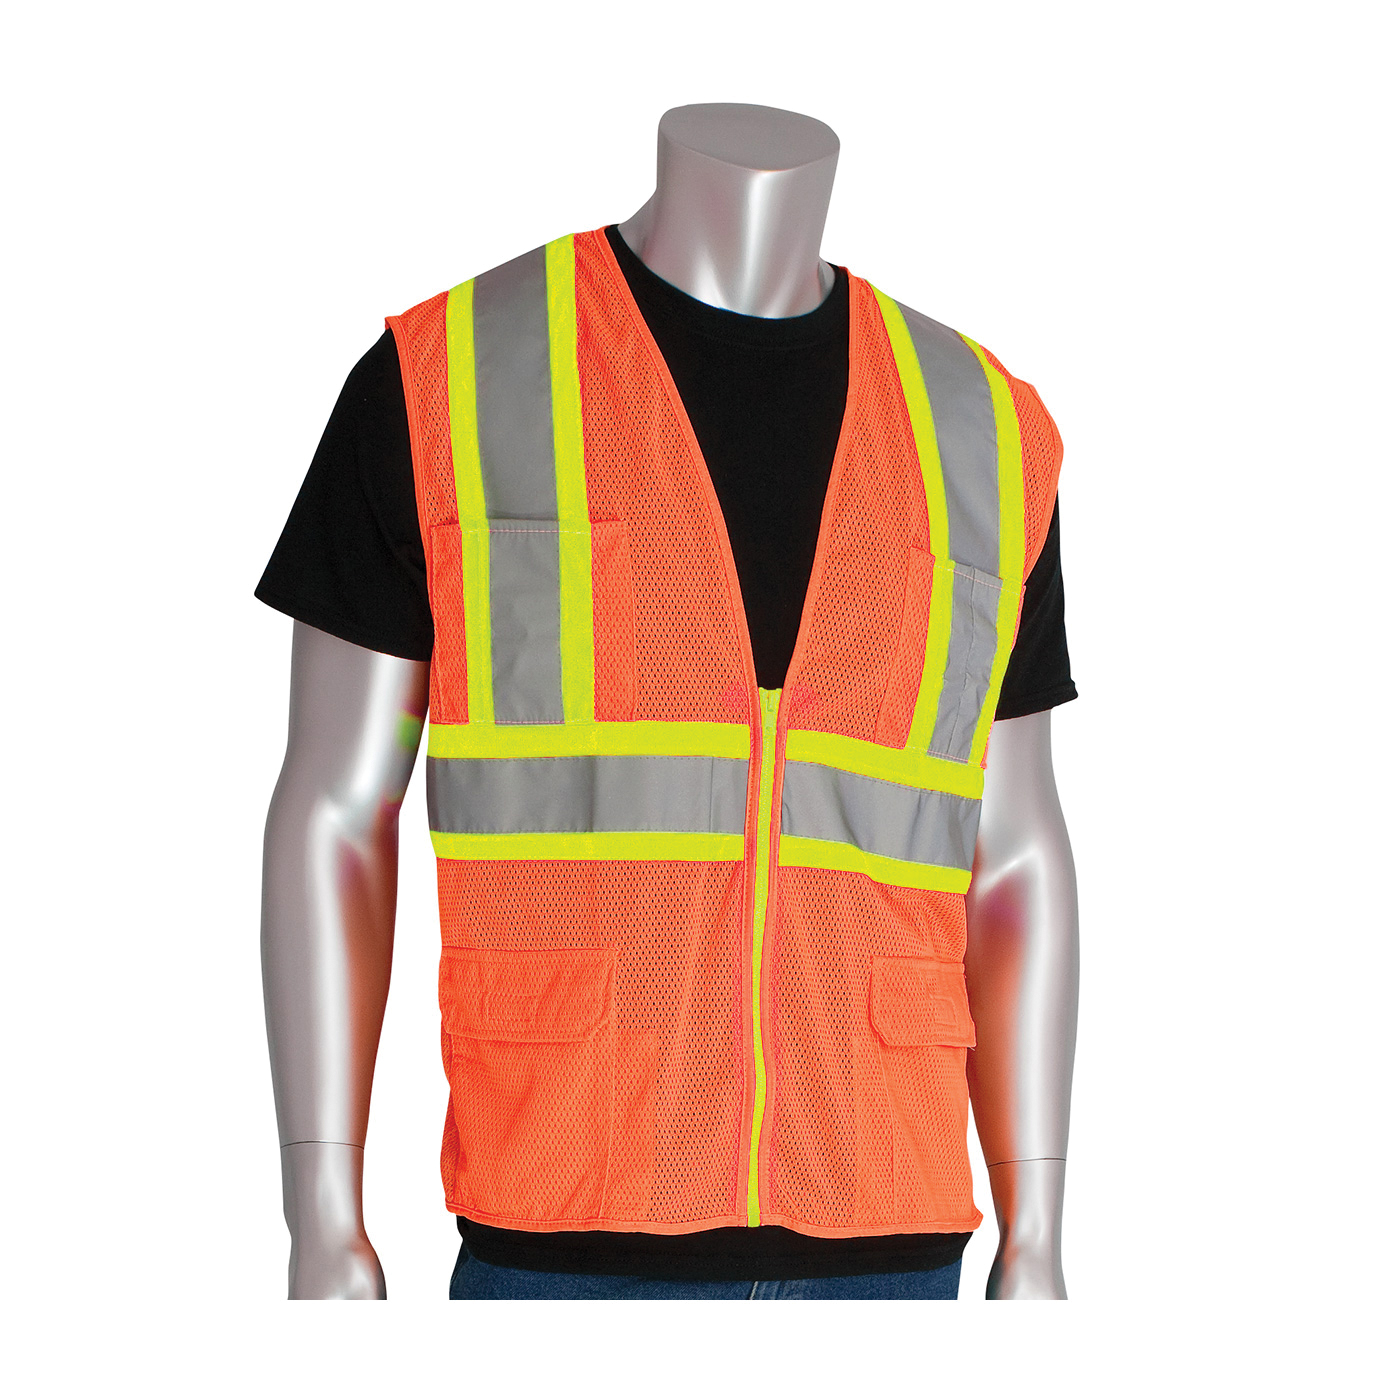 PIP® 302-MAPMOR-M 2-Tone Premium Surveyor Safety Vest, M, Hi-Viz Orange, Polyester, Zipper Closure, 11 Pockets, ANSI Class: Class 2, Specifications Met: ANSI 107 Type R